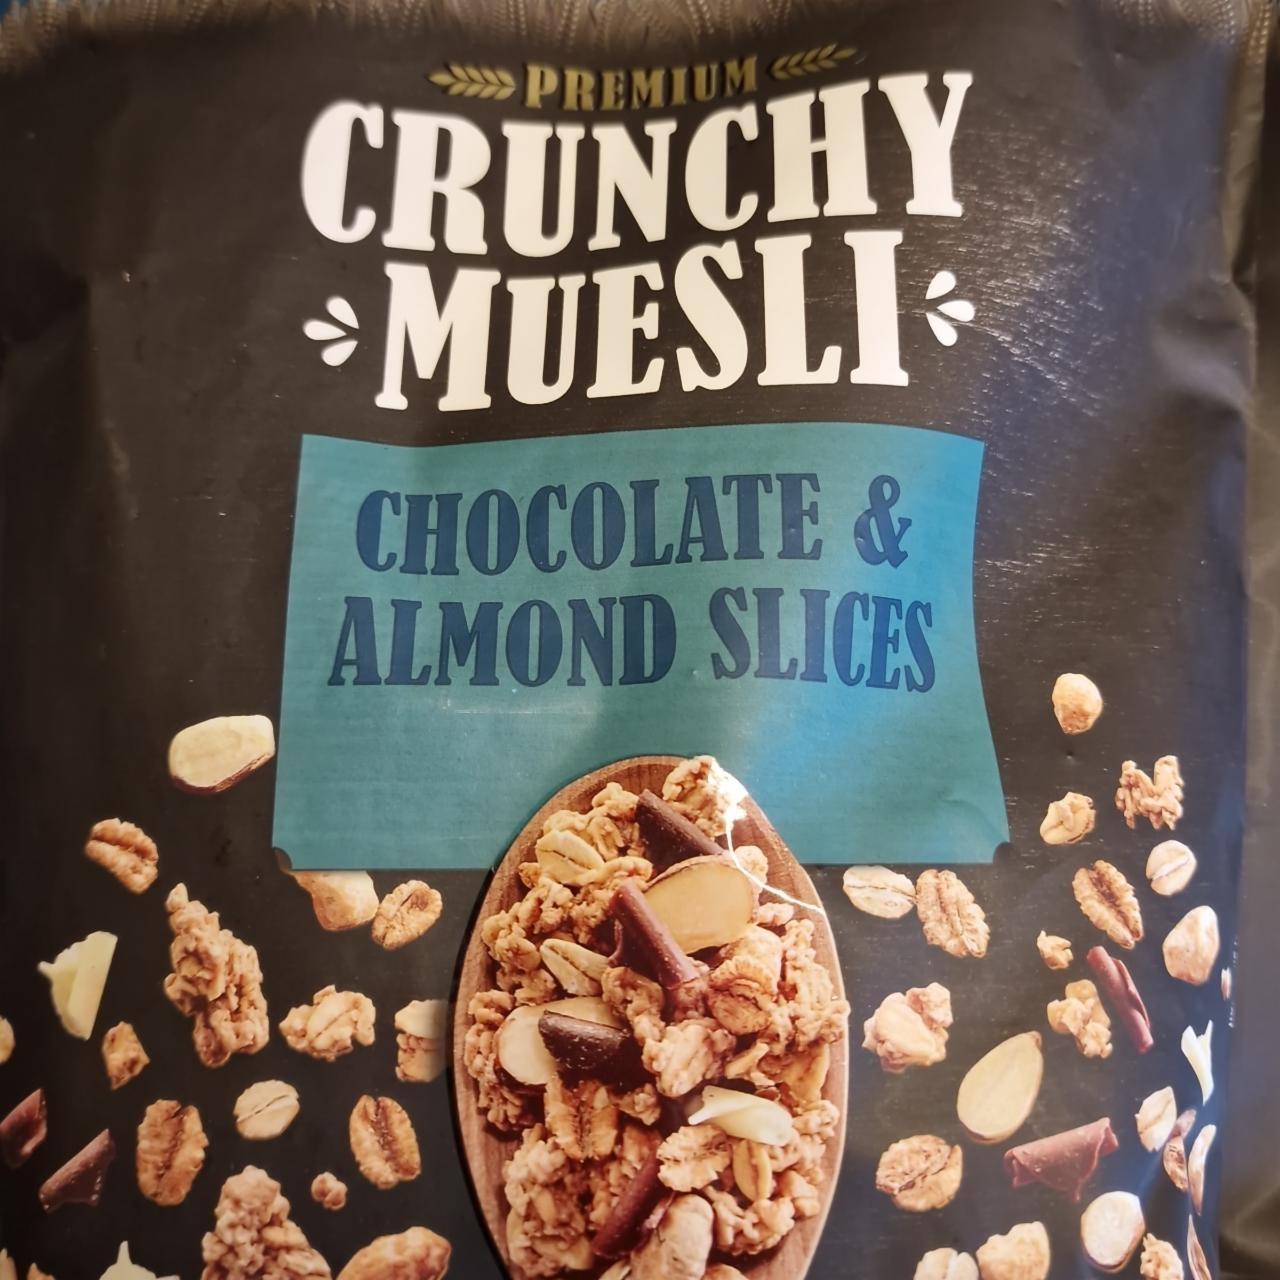 Képek - Crunchy Muesli Chocolate & Almonds slices Crownfield